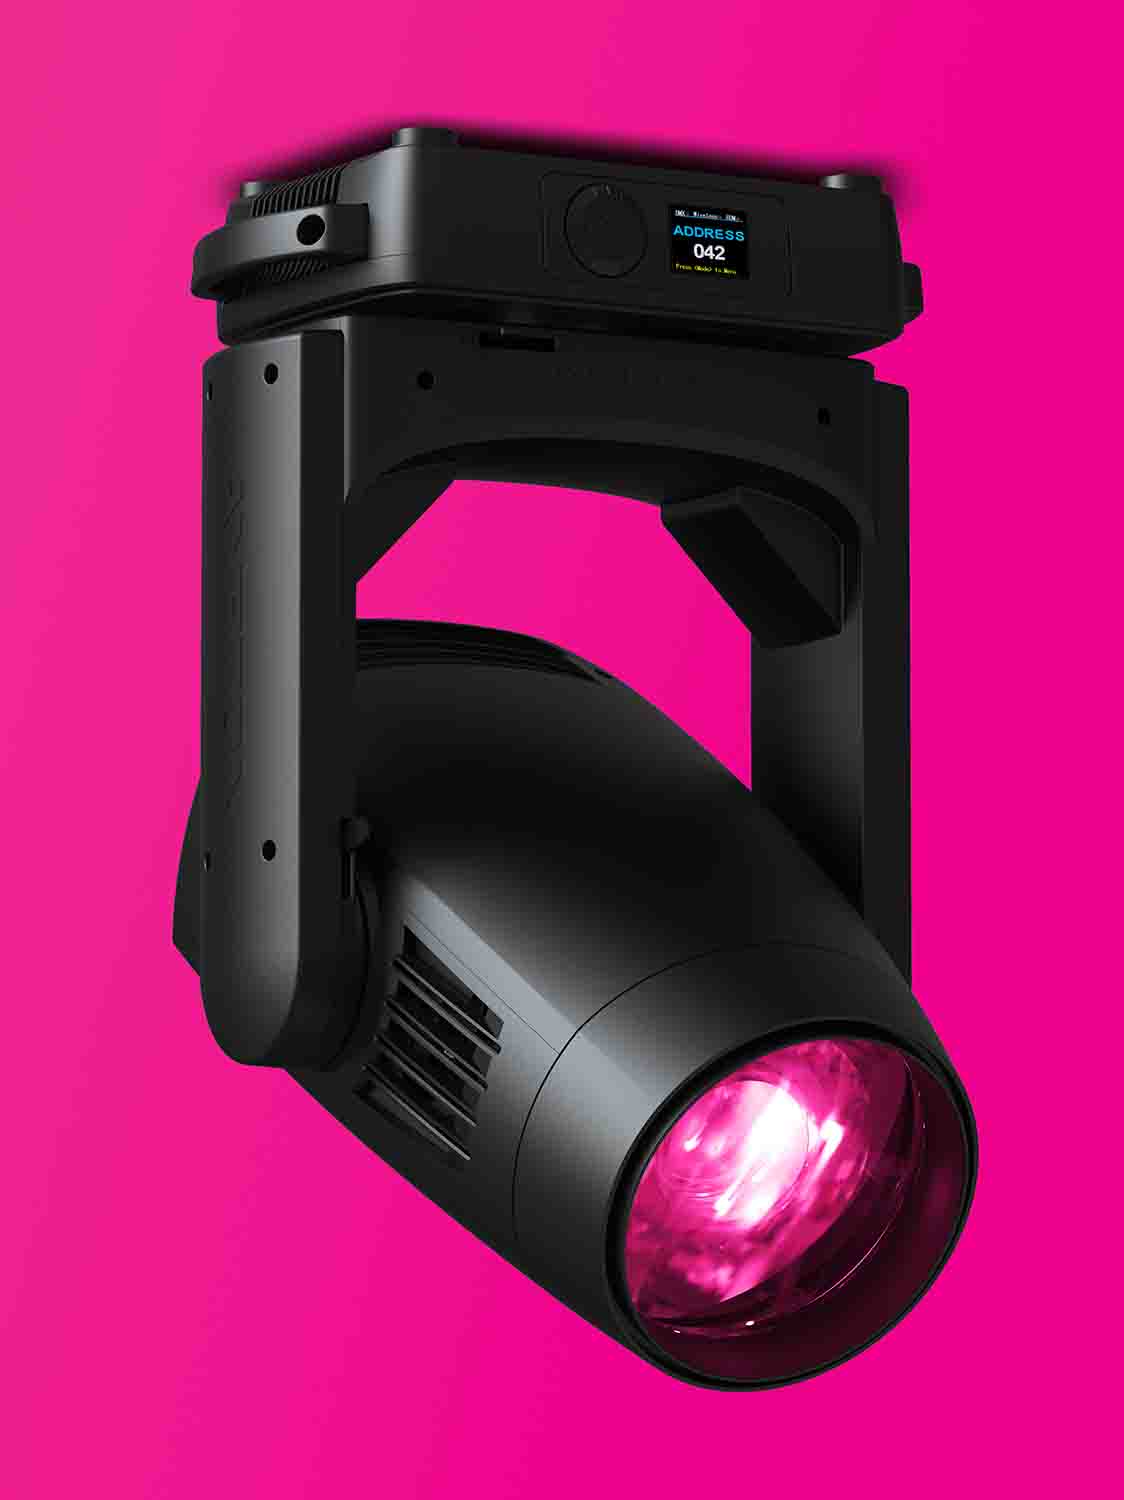 Ayrton Karif-LT 300W LED Moving Head Spot with 3 to 45 Degree Zoom - Hollywood DJ